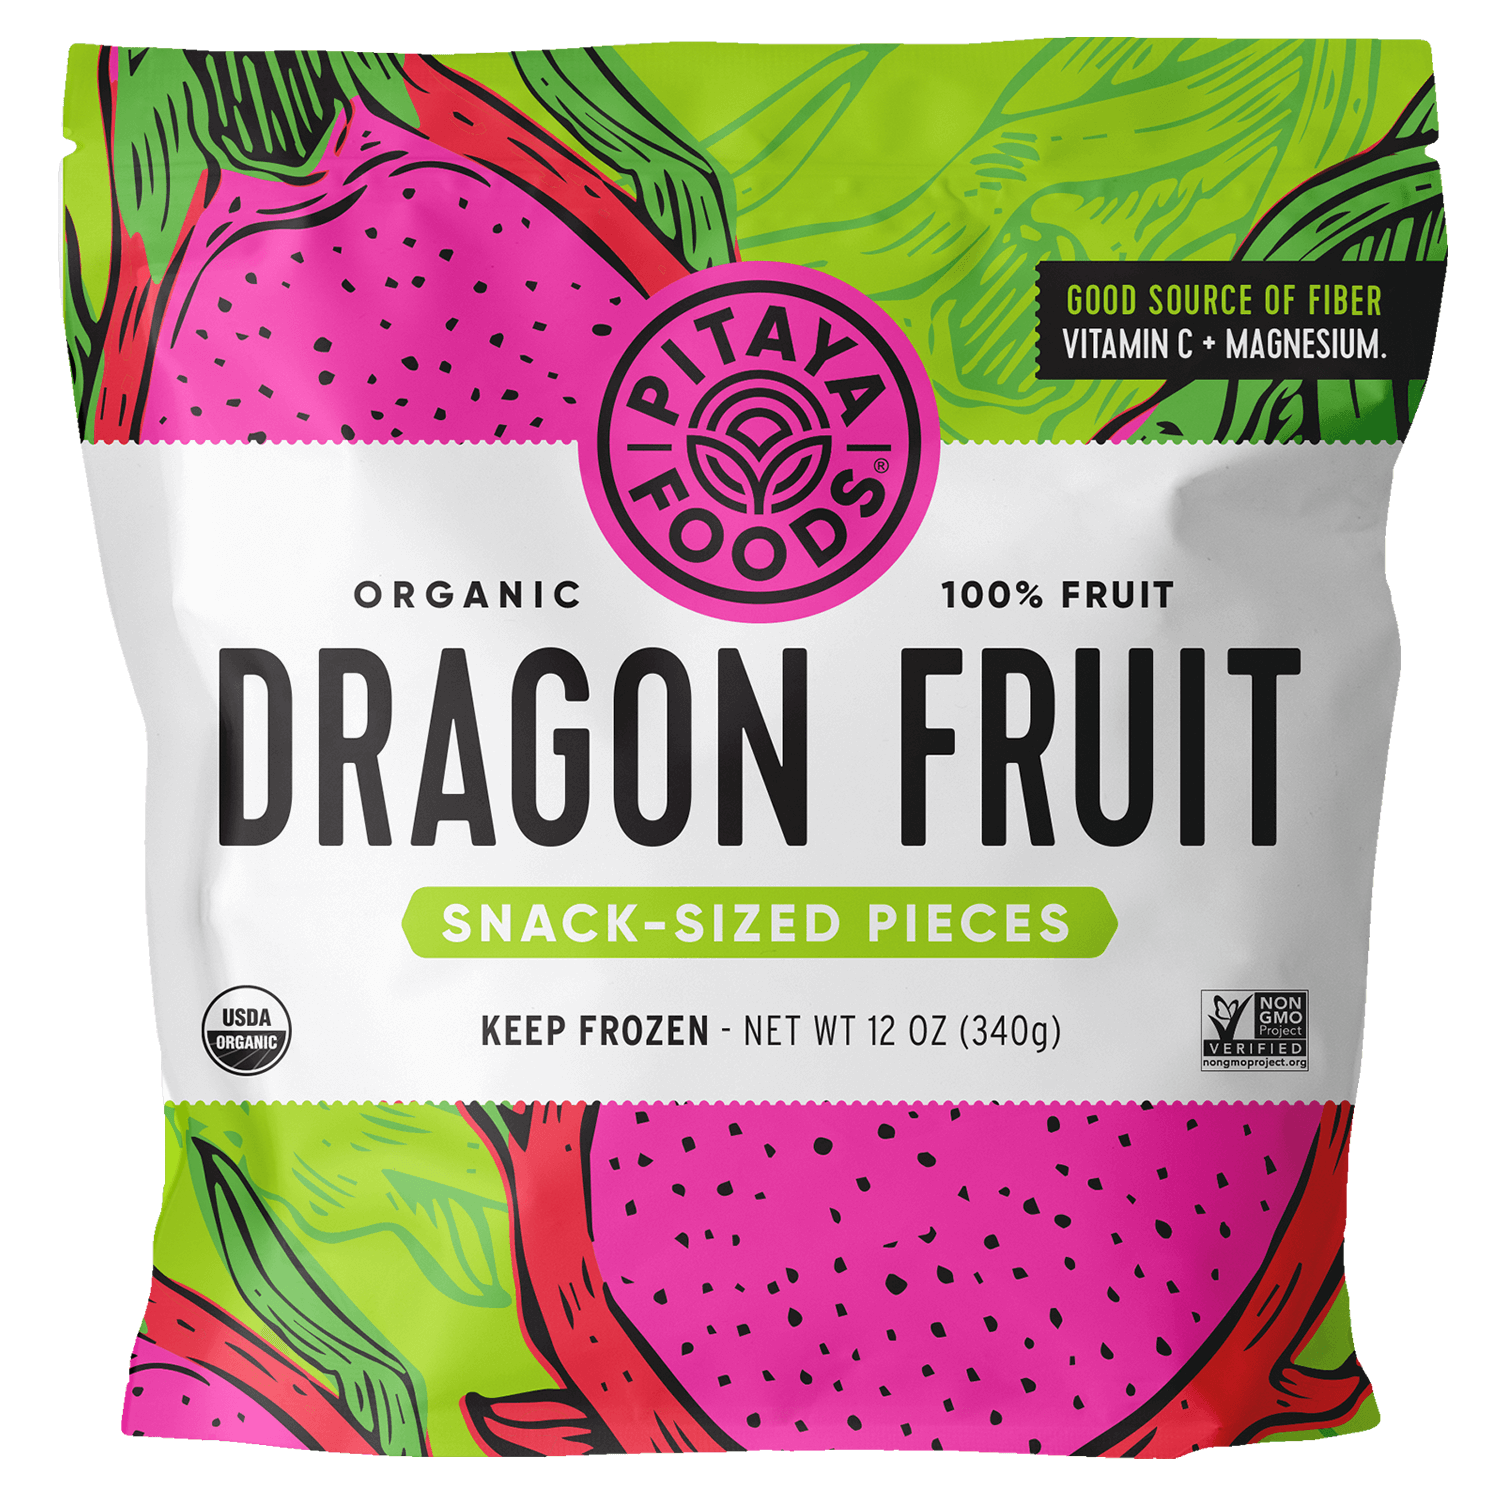 Organic Dragon Fruit Snack-Sized Pieces